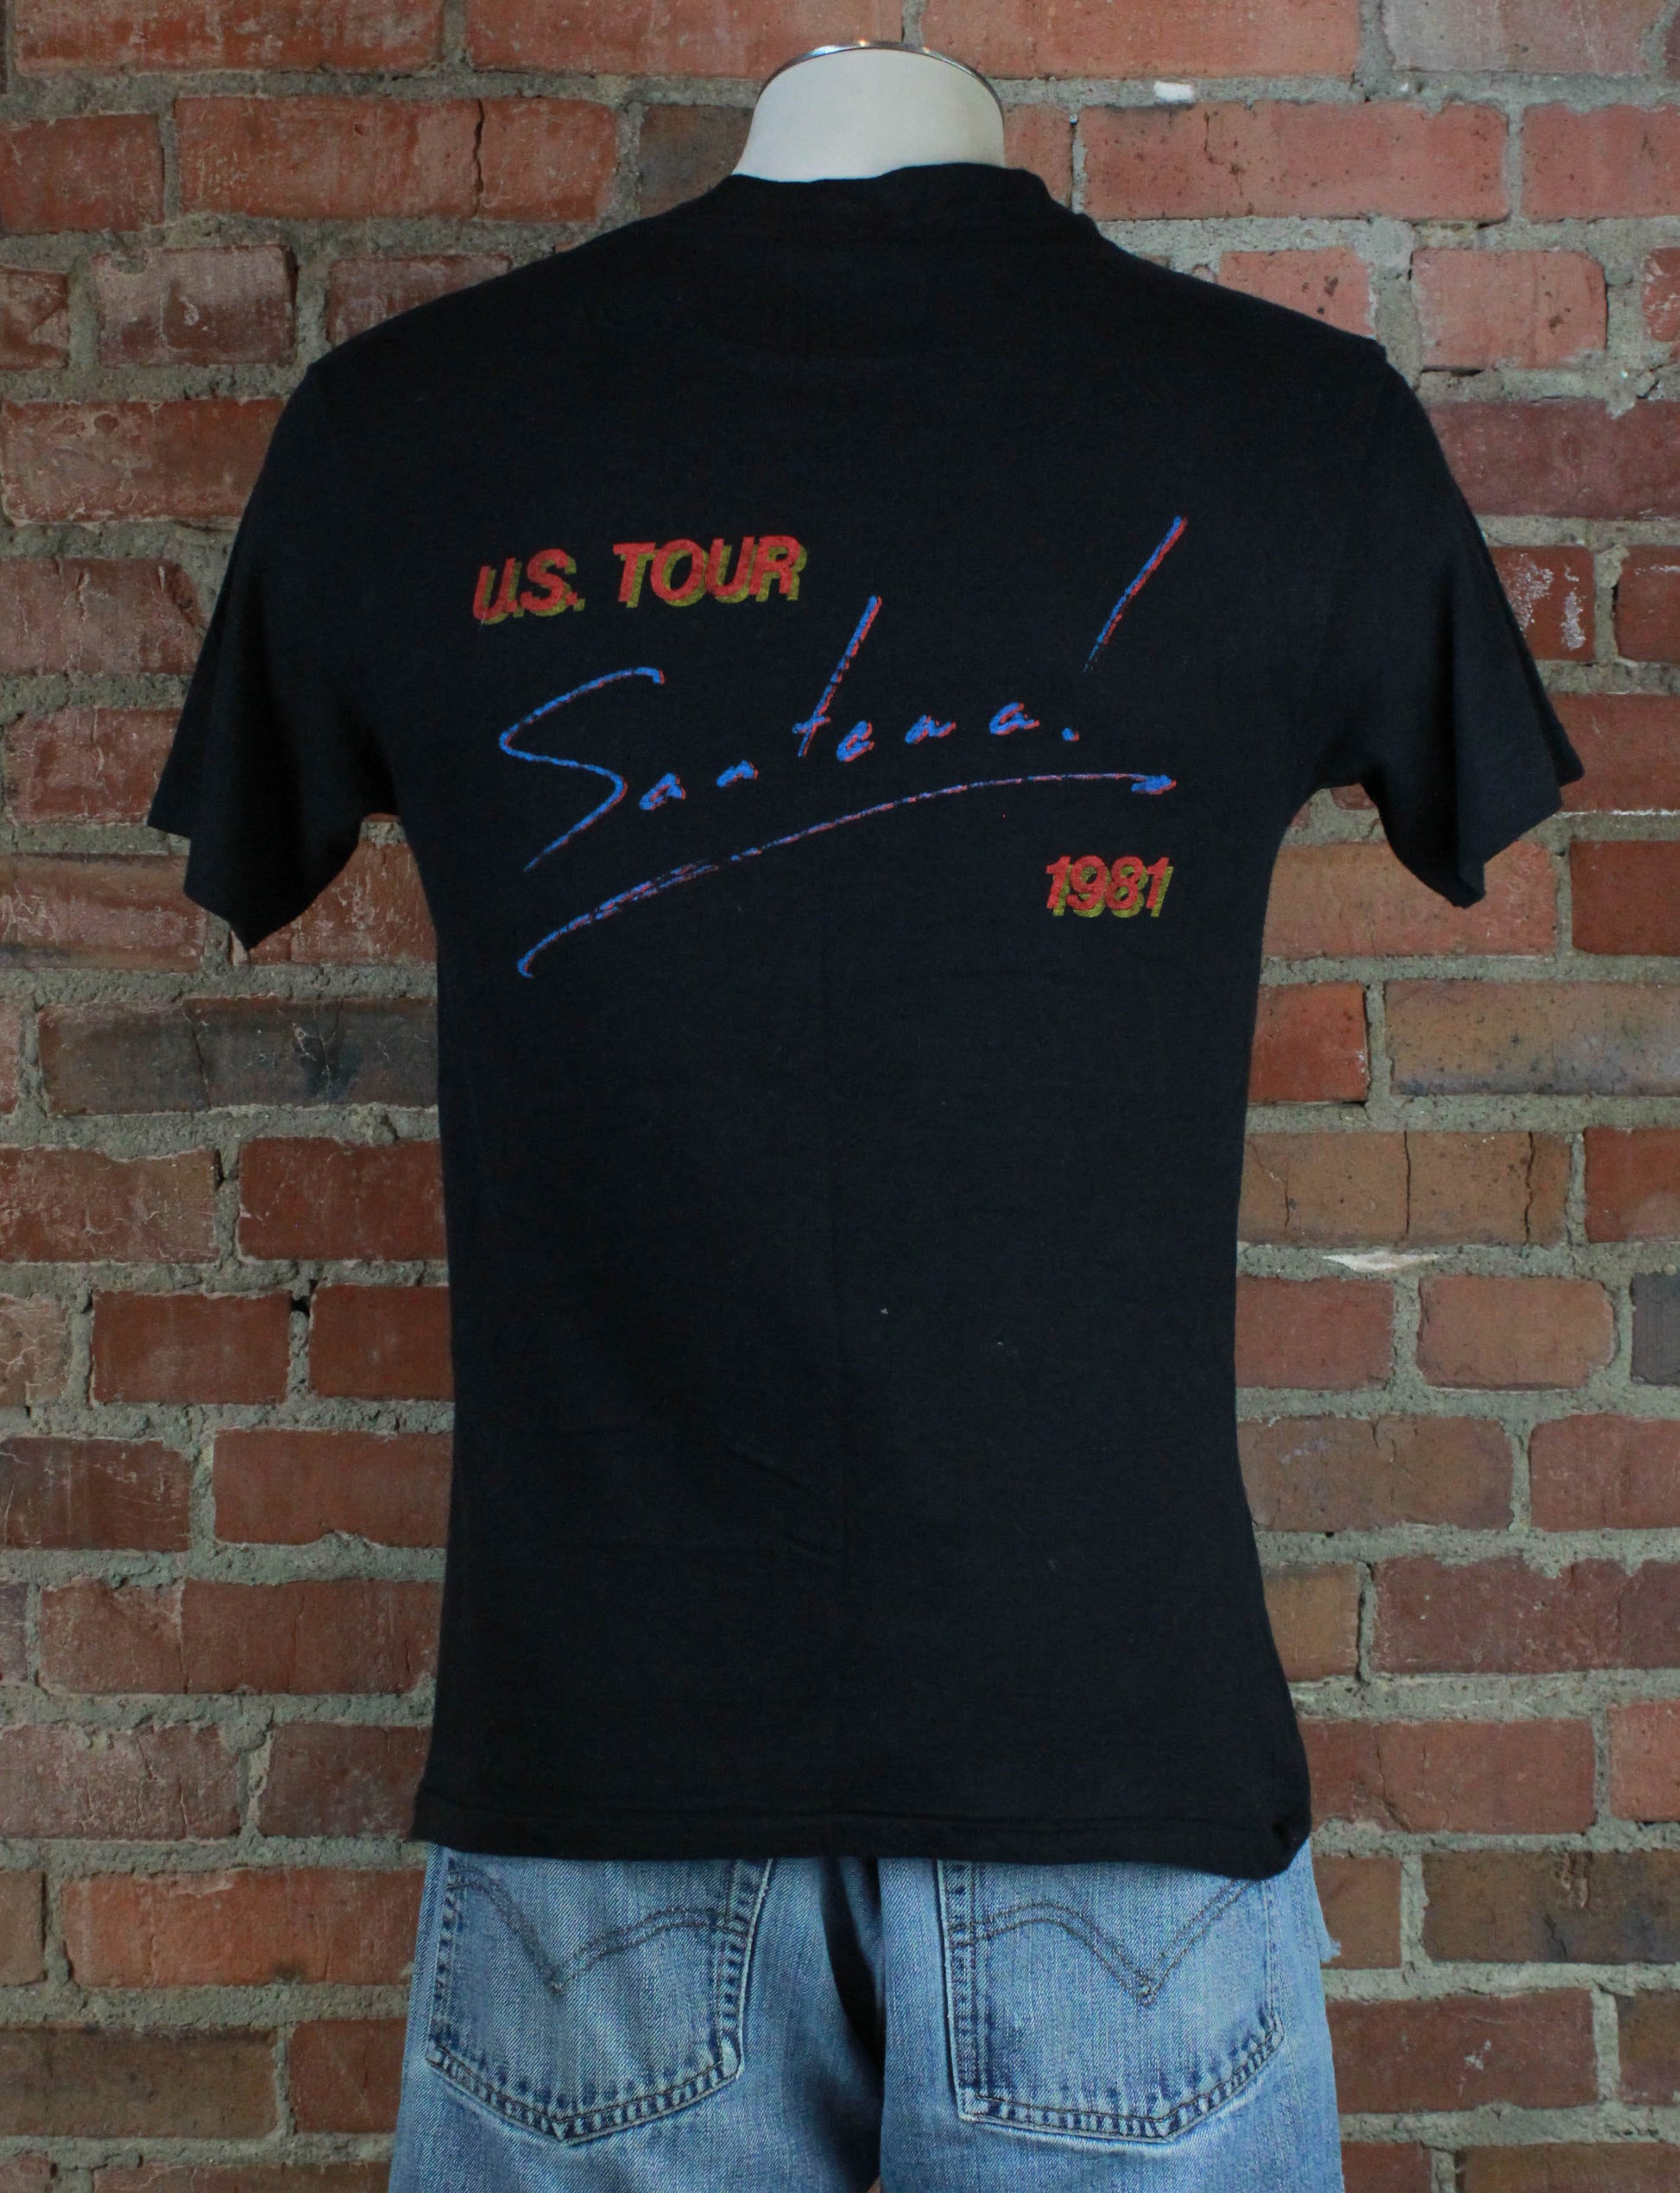 Vintage Satana Concert T Shirt 1981 US Tour Zebop! Winning - Medium